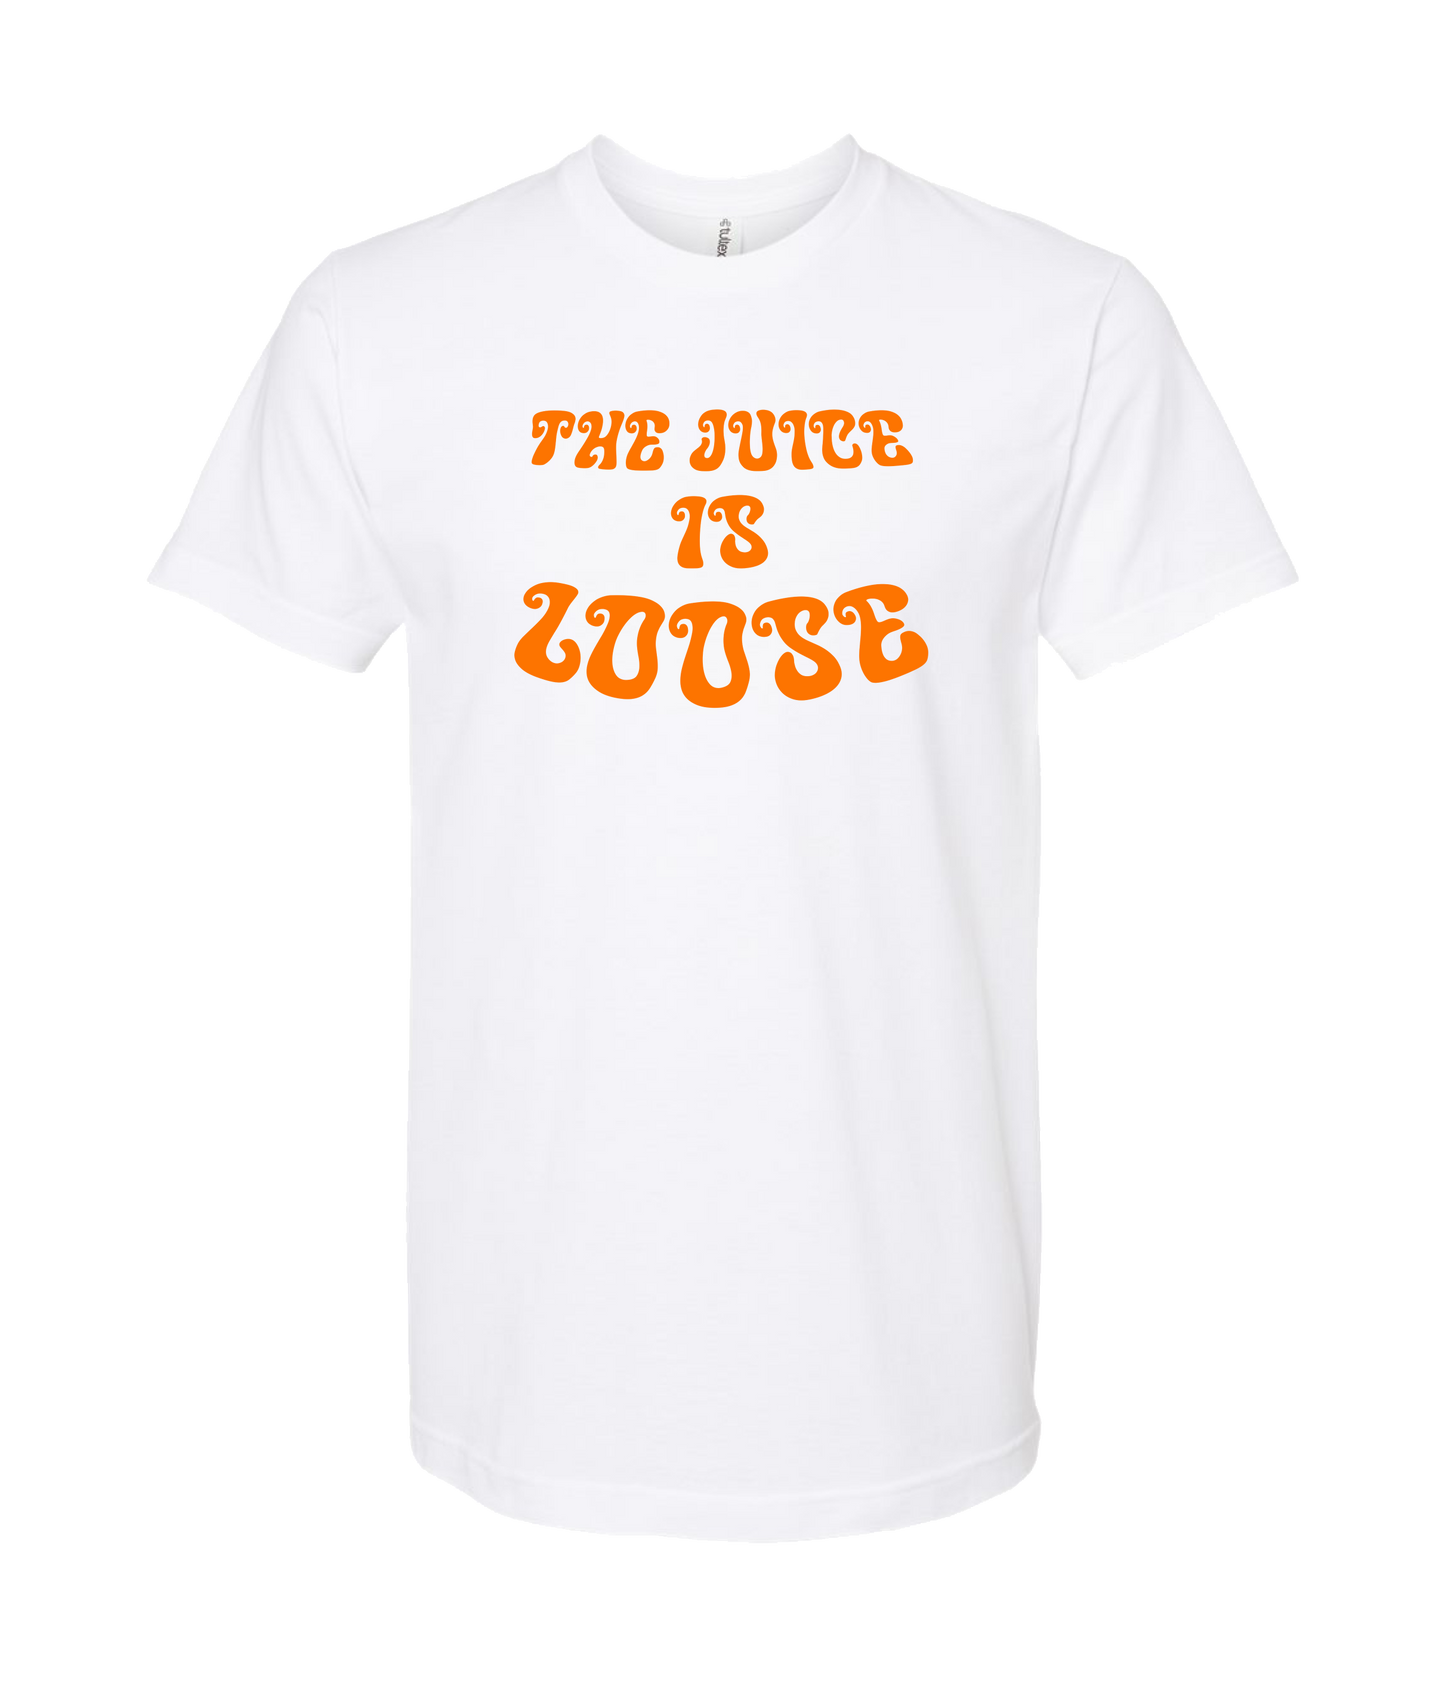 Orange Juice - The Juice is Loose - White T Shirt